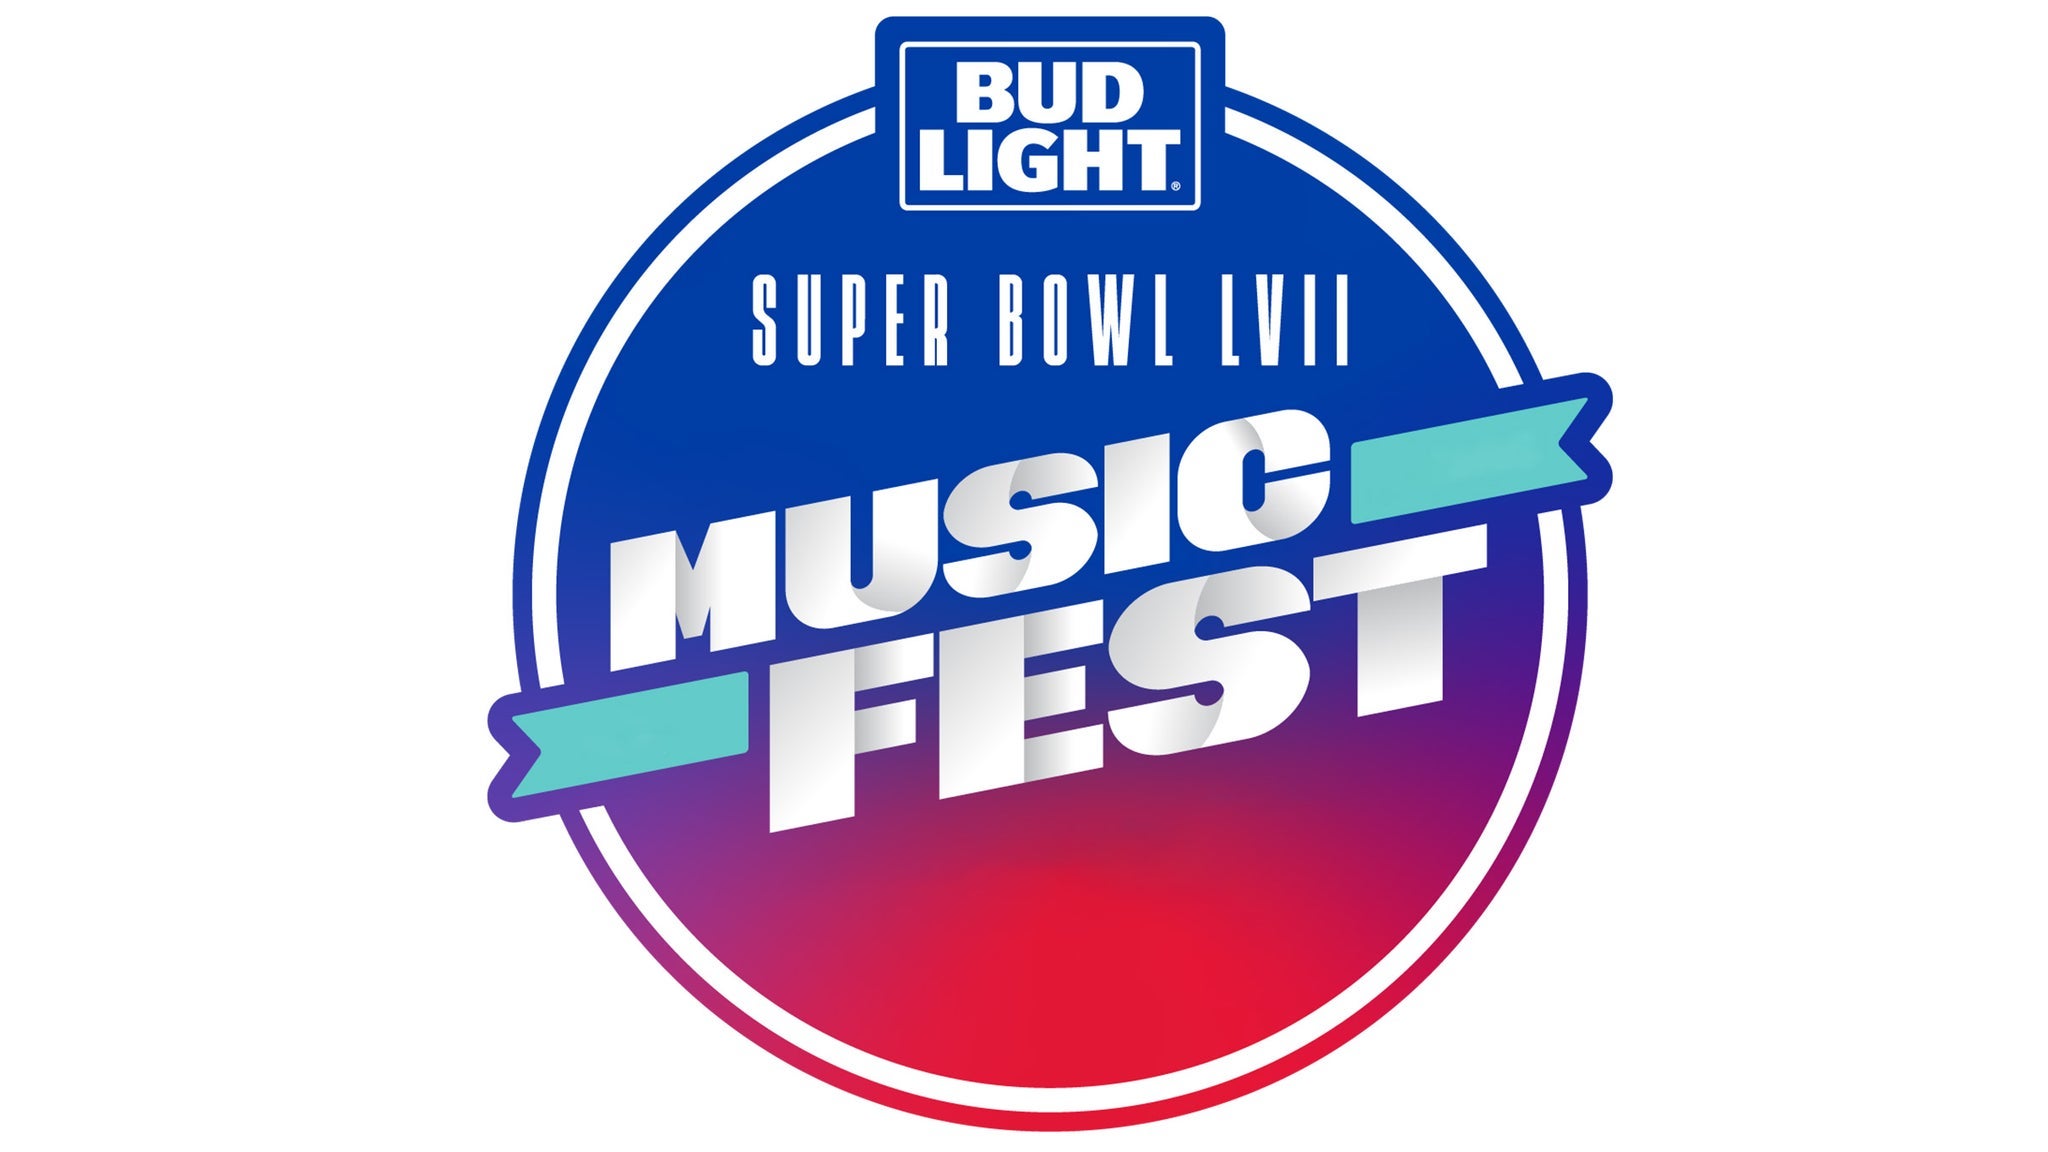 Bud Light Super Bowl Music Fest - Imagine Dragons and Kane Brown